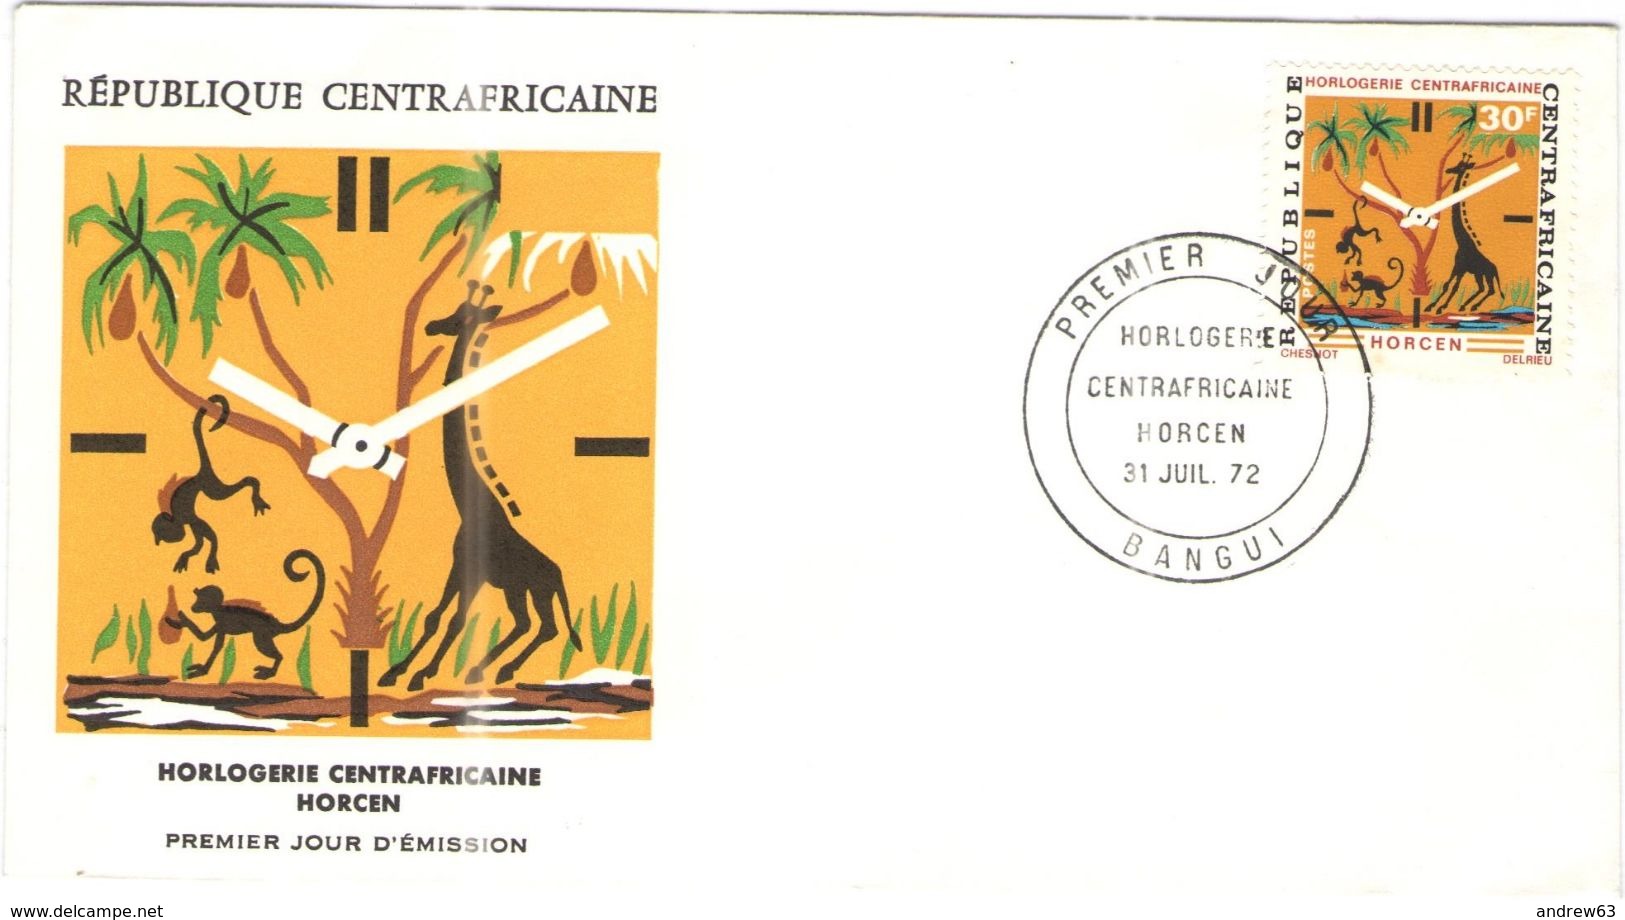 Repubblica Centroafricana - REPUBLIQUE CENTRAFRICAINE - 1972 - 30F Horlogerie - Horcen - Bangui - FDC - Repubblica Centroafricana